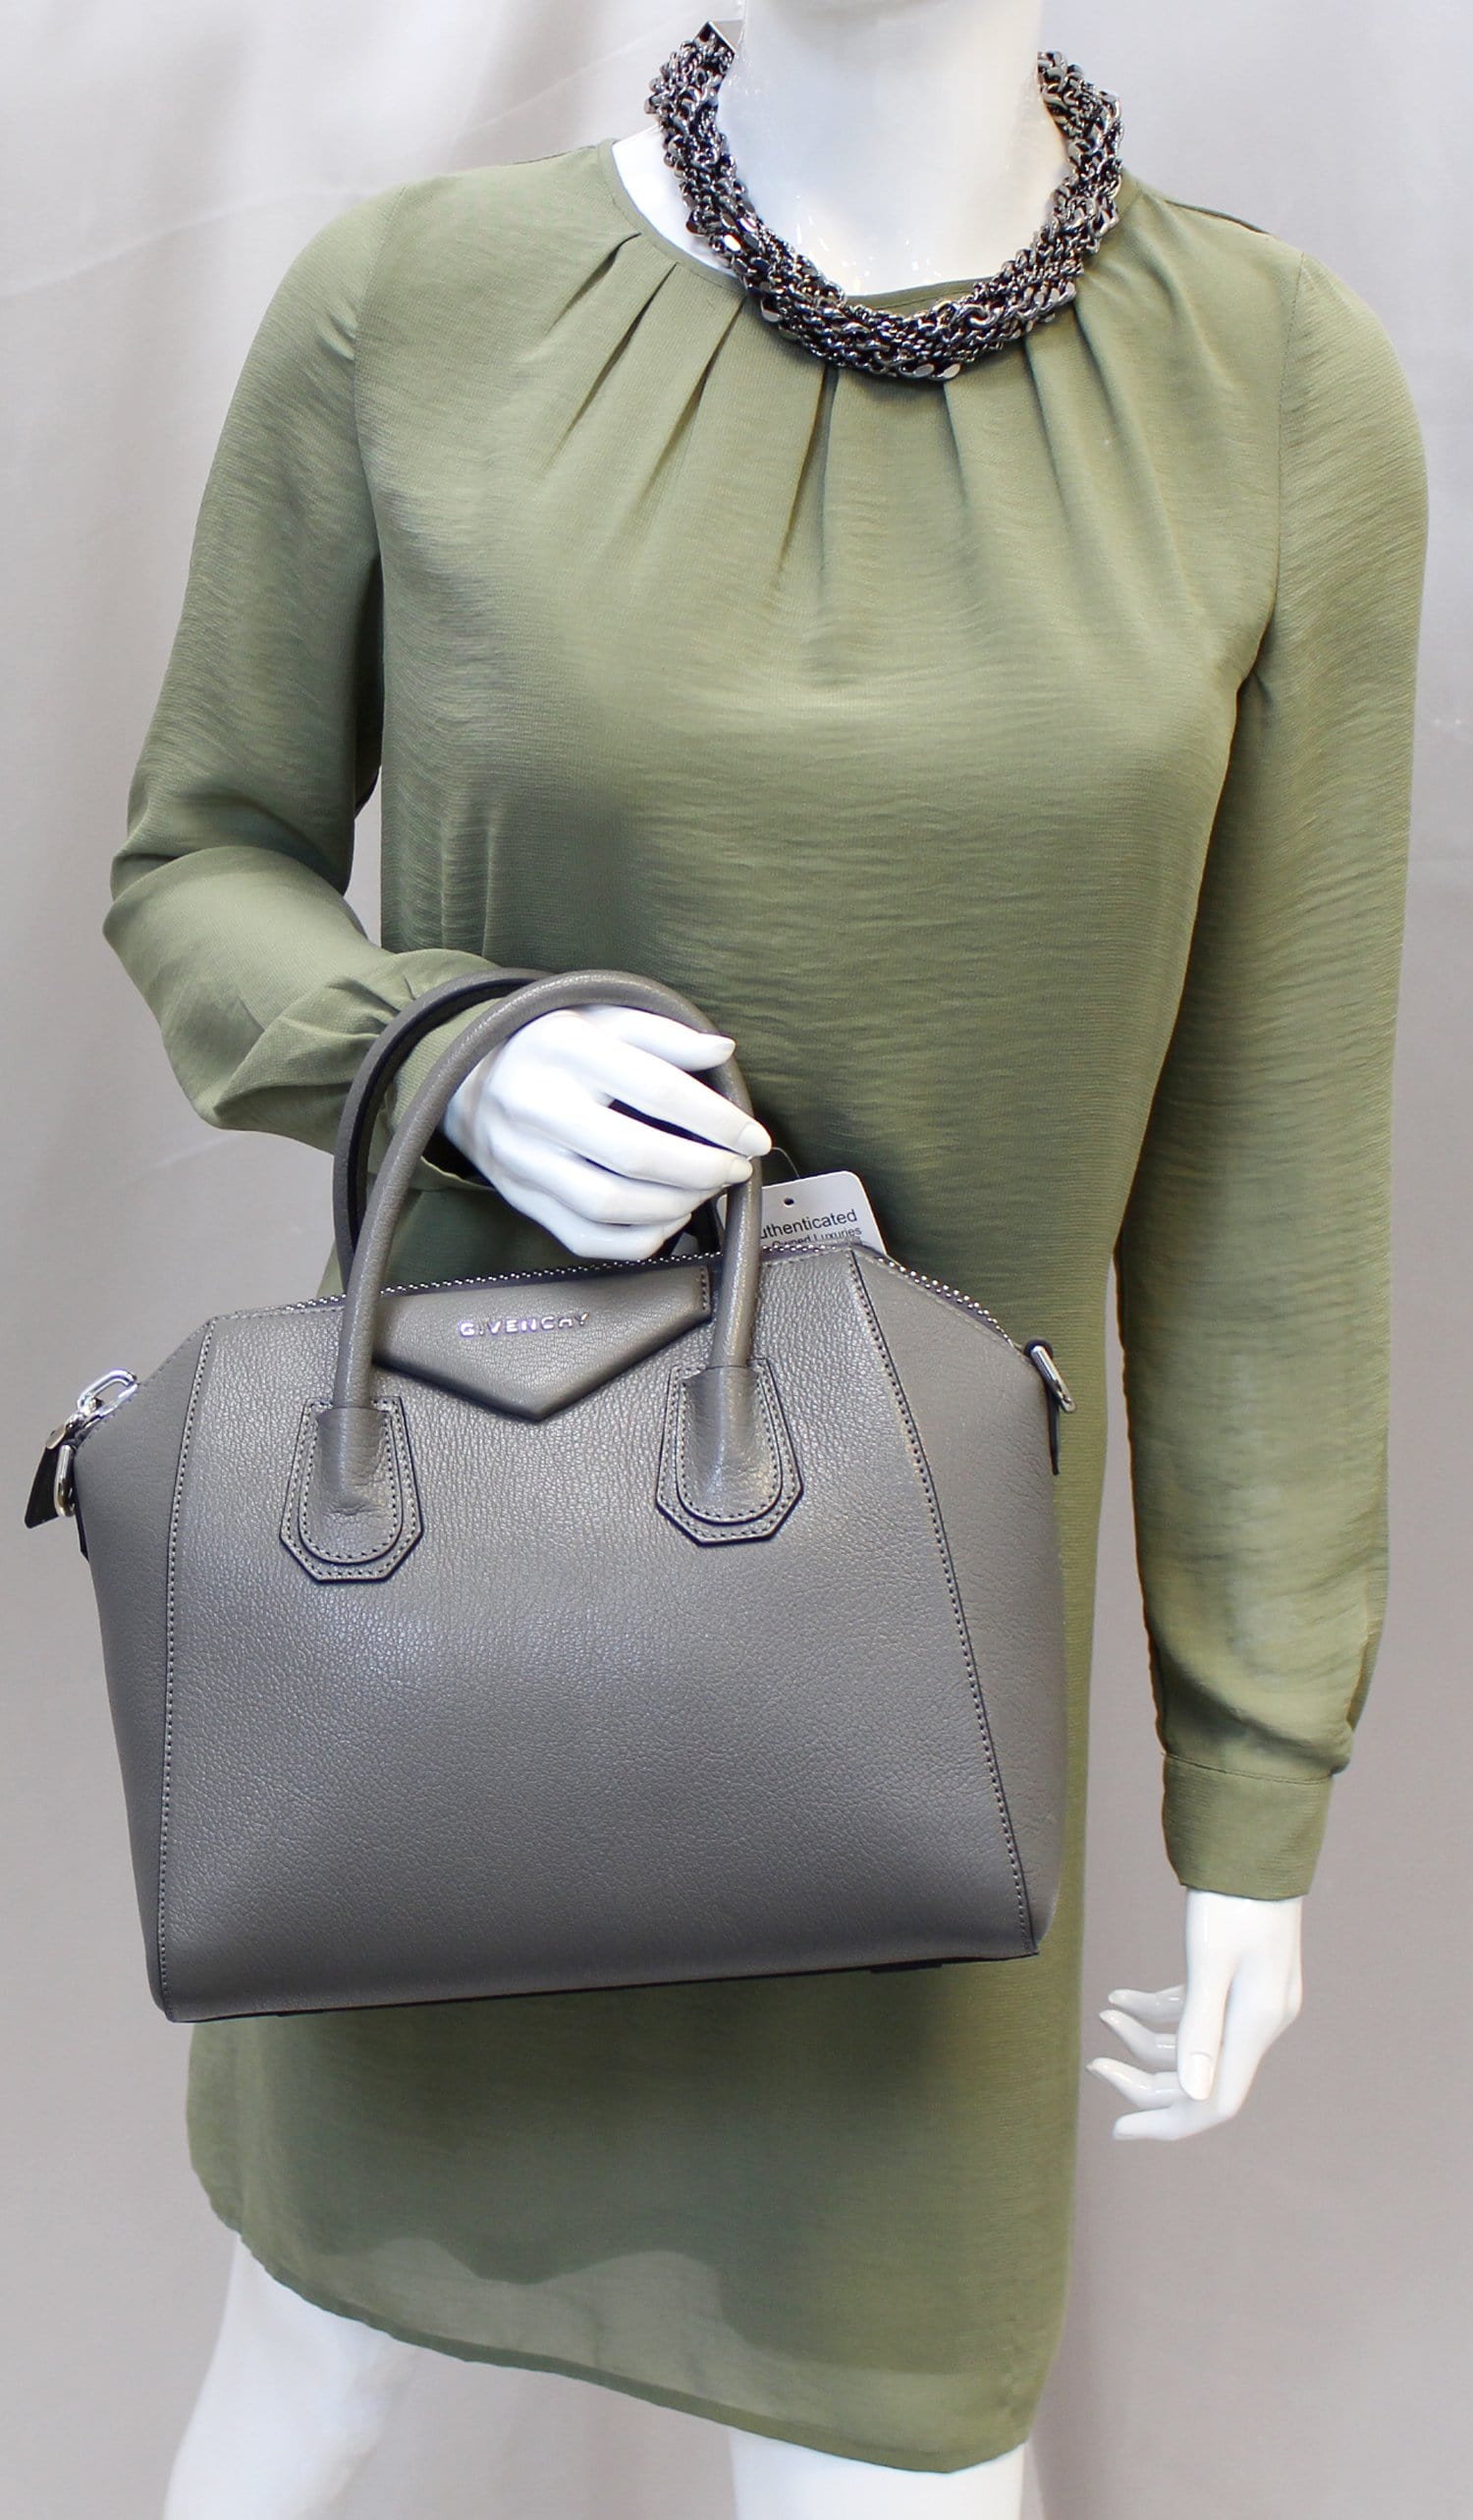 Givenchy Nano Antigona Bag in Pearl Grey